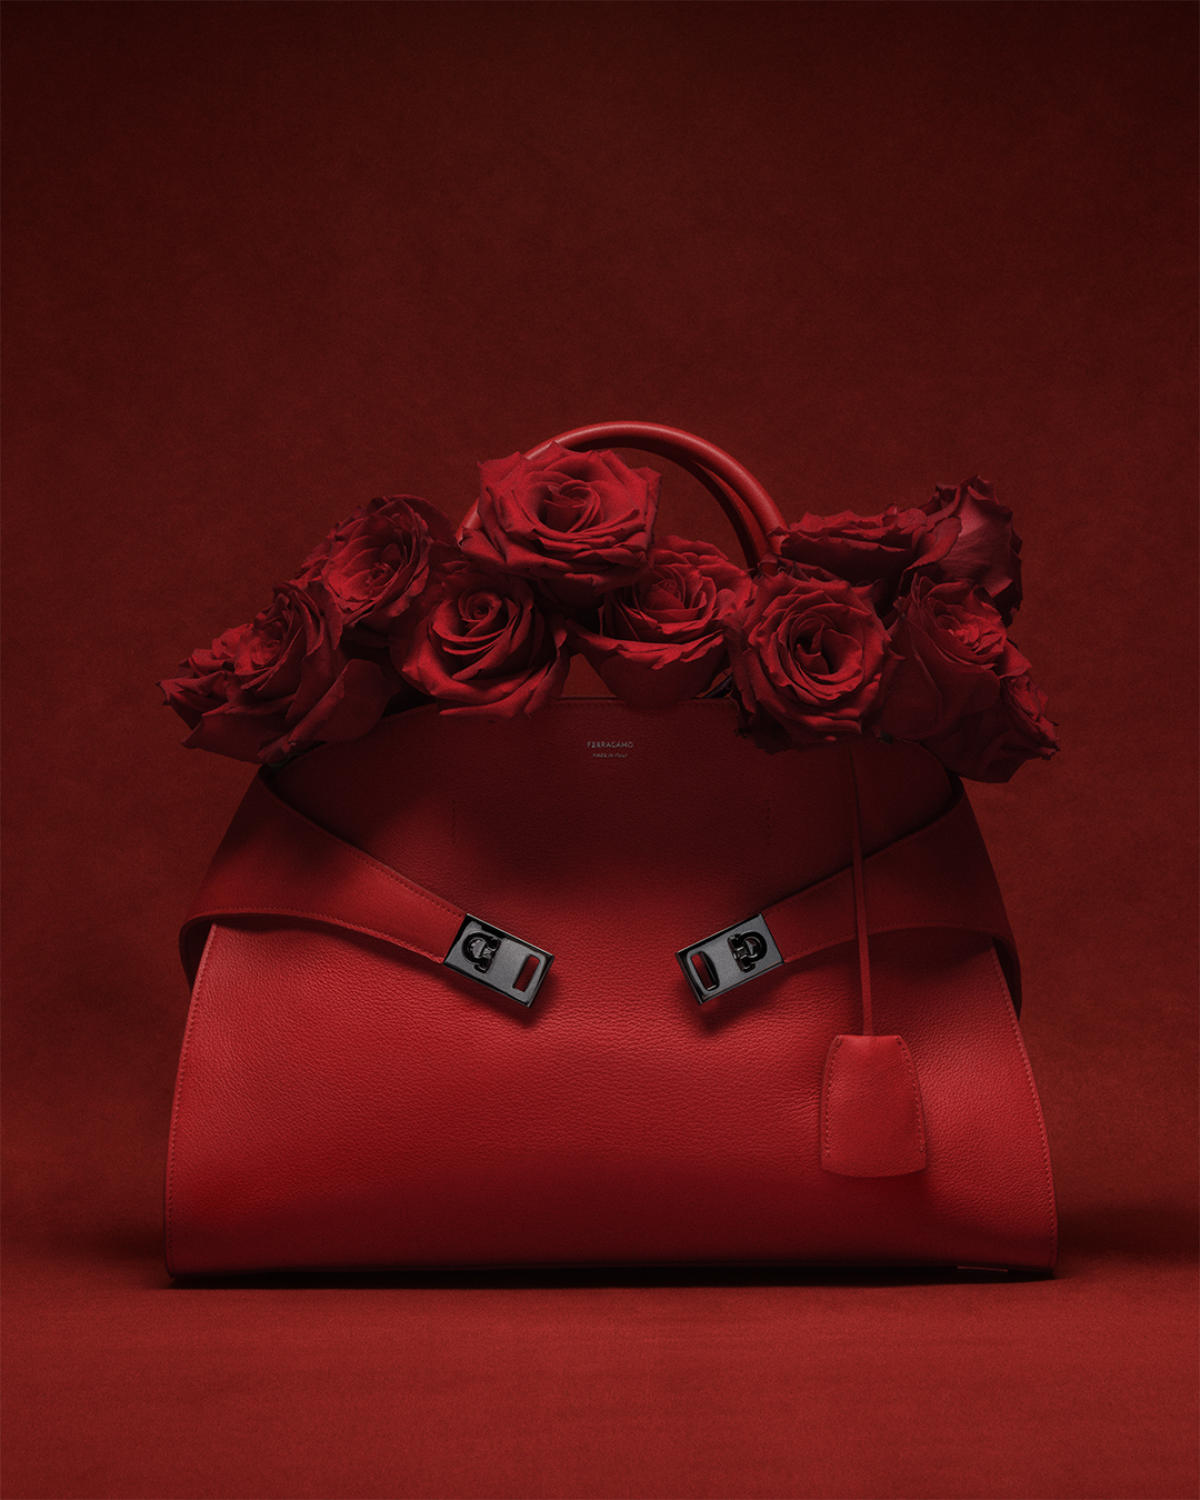 The Ferragamo Hug Bag For Saint Valentine Celebration